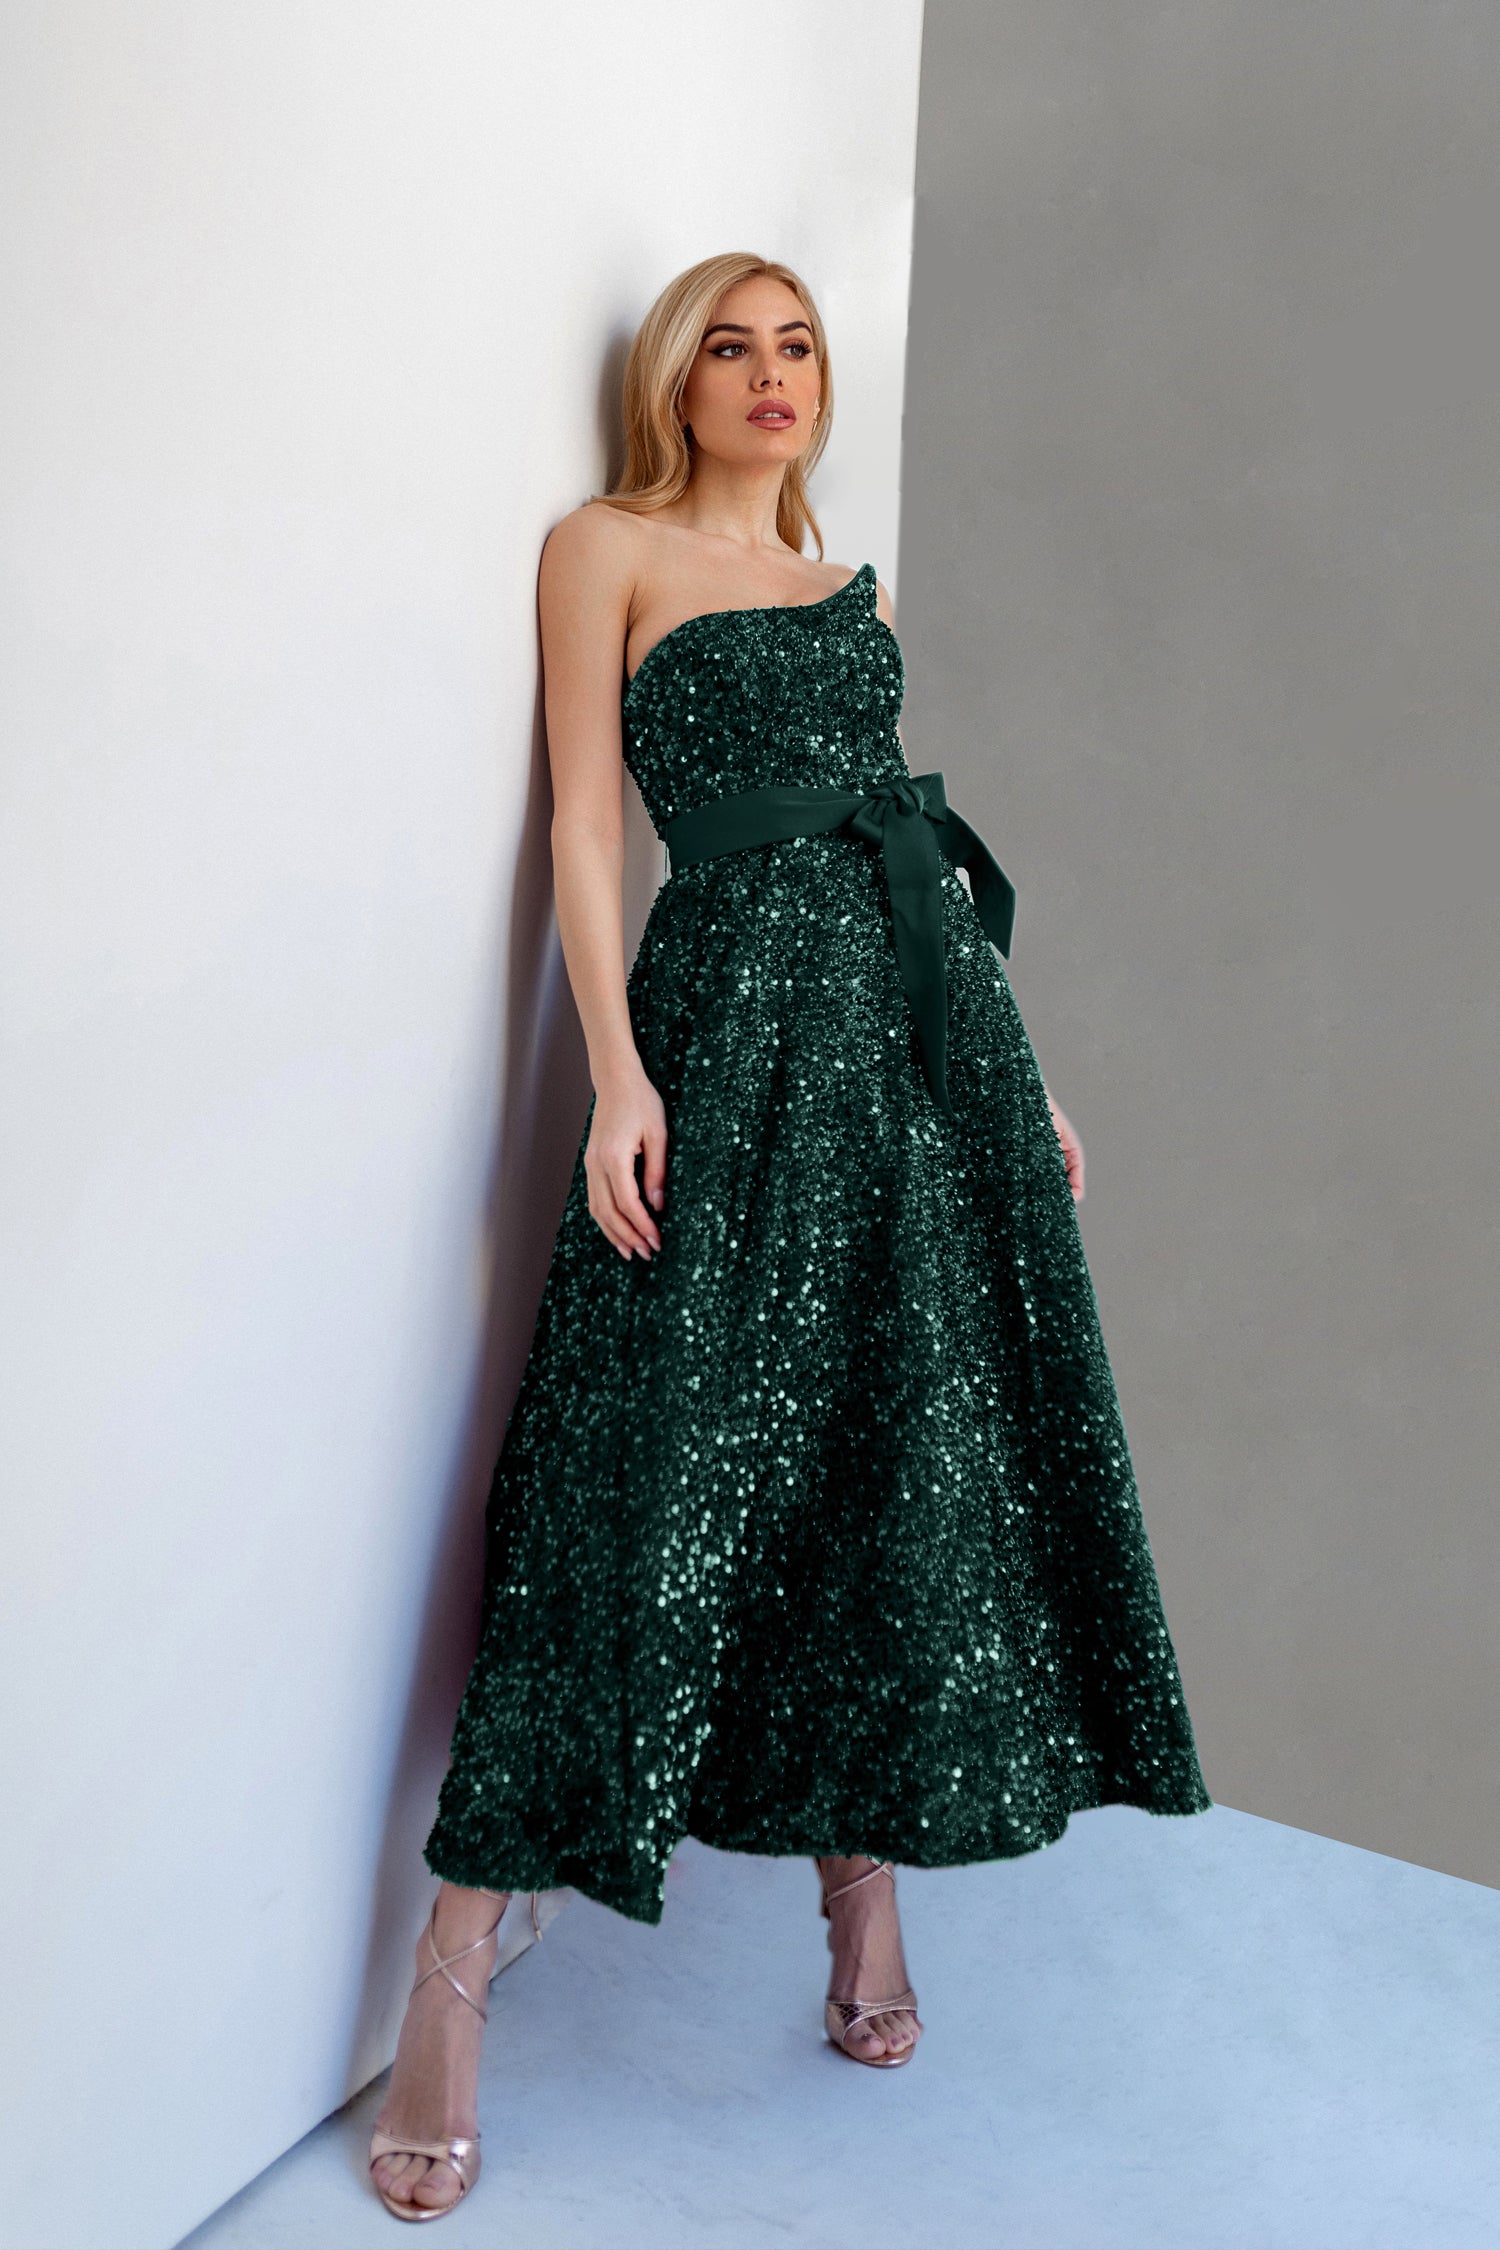 Tina Holly TK047 Emerald Sequin With A Strapless Neckline A-line Midi Tea-Length Dress